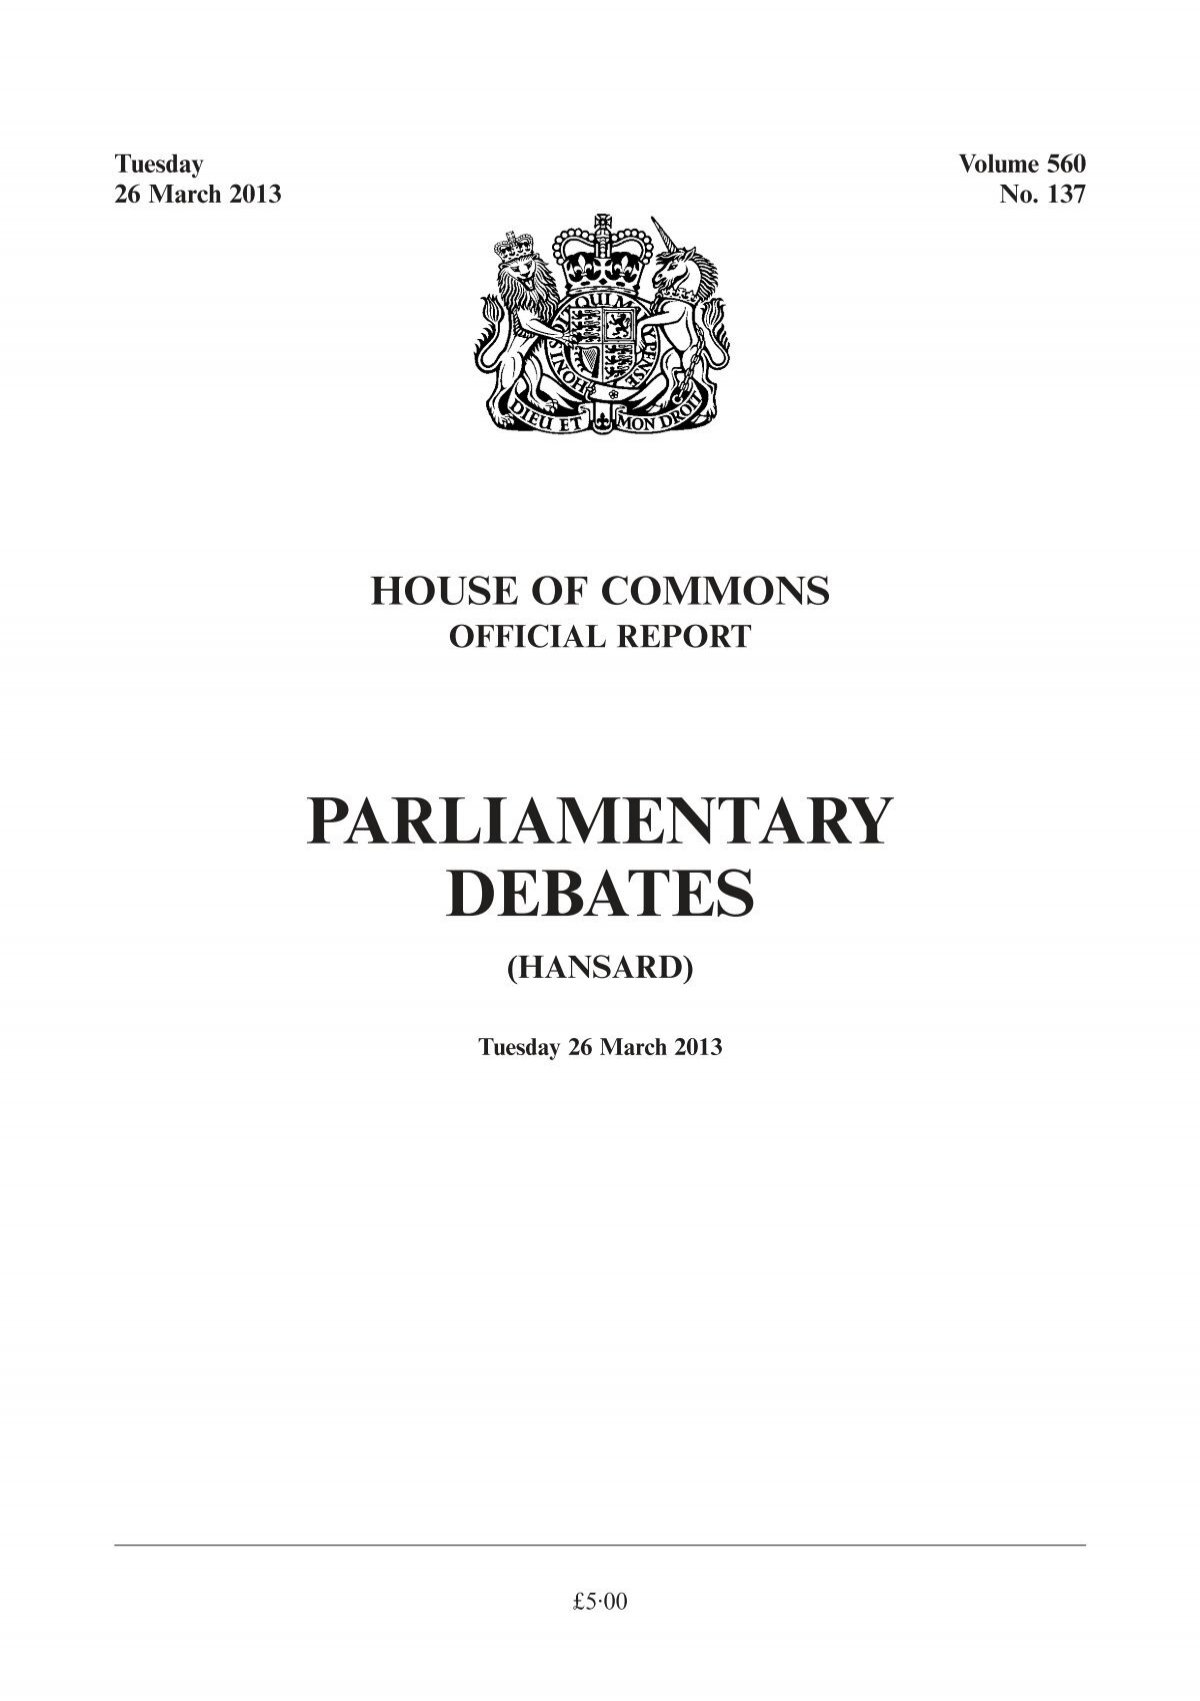 PARLIAMENTARY DEBATES - United Kingdom Parliament